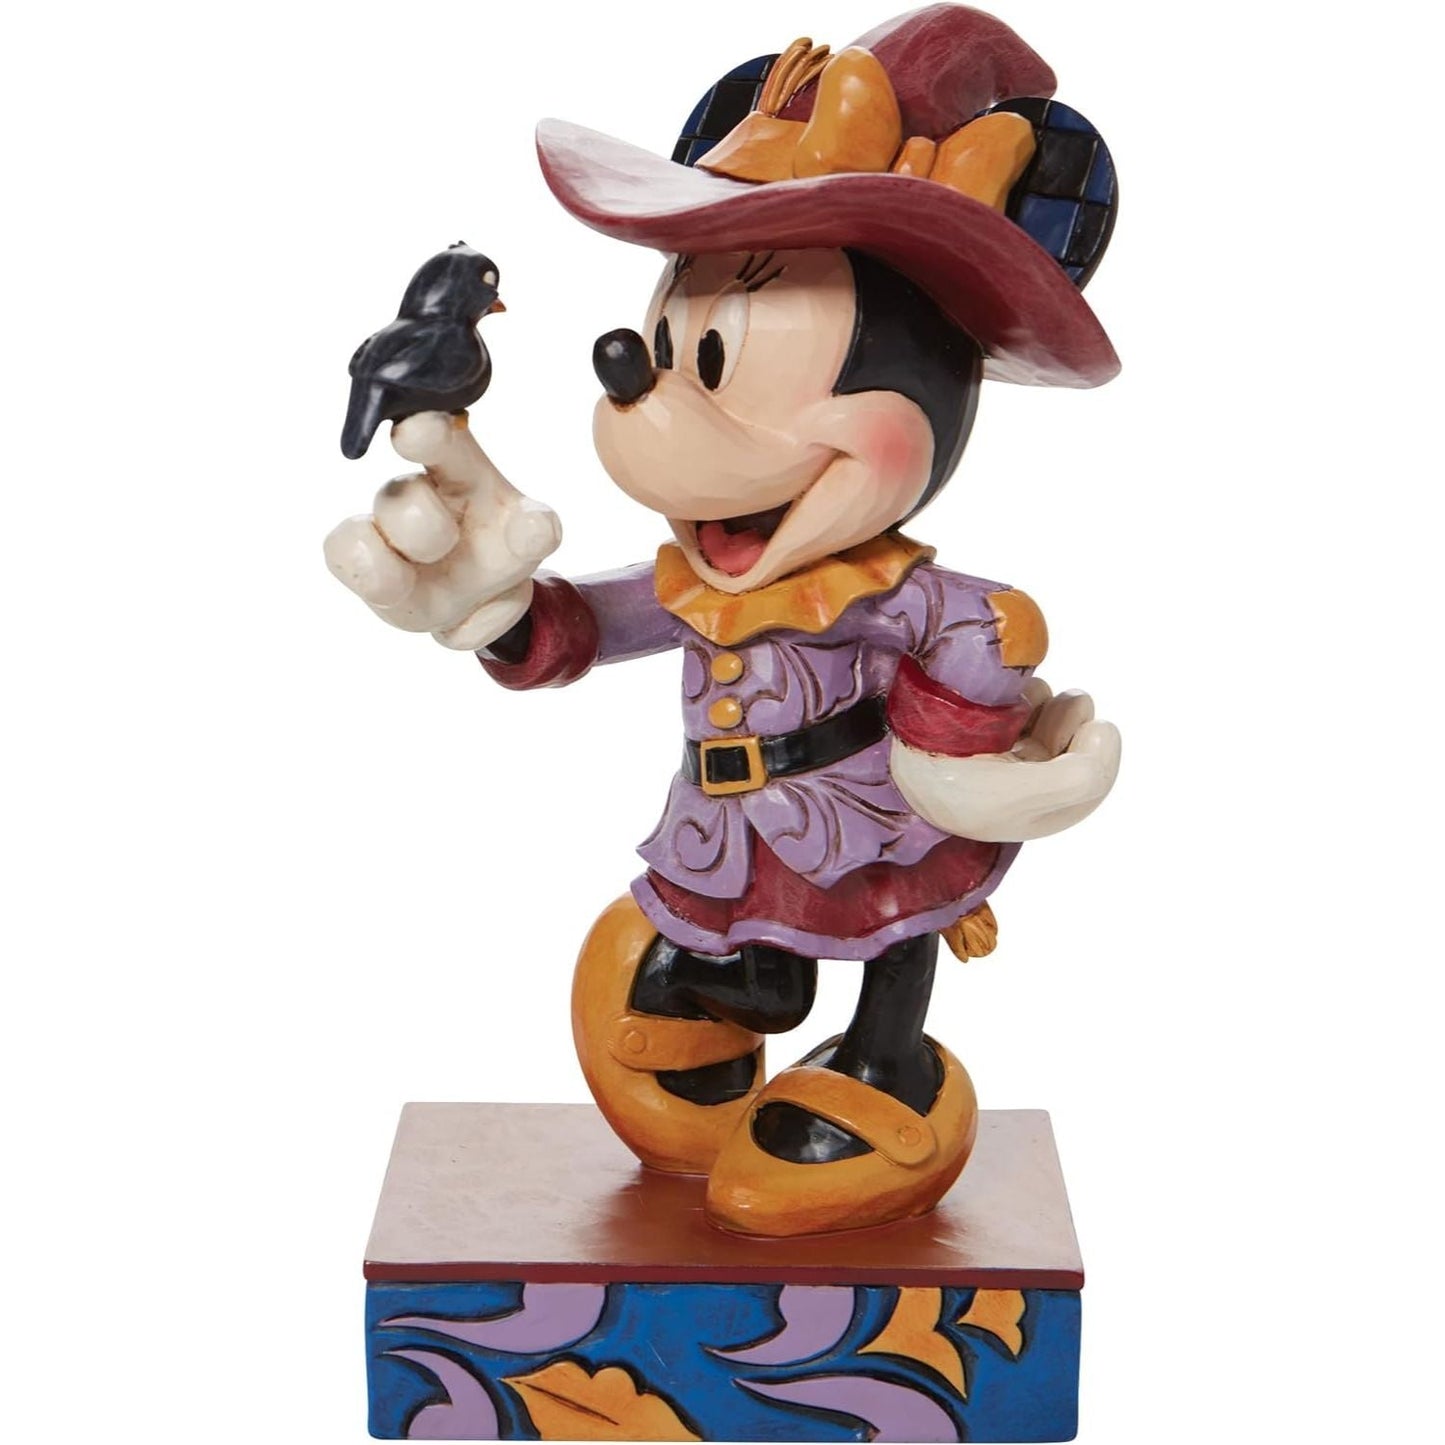 Jim Shore Disney Traditions Halloween Scarecrow Minnie Mouse Figurine, 6.5"